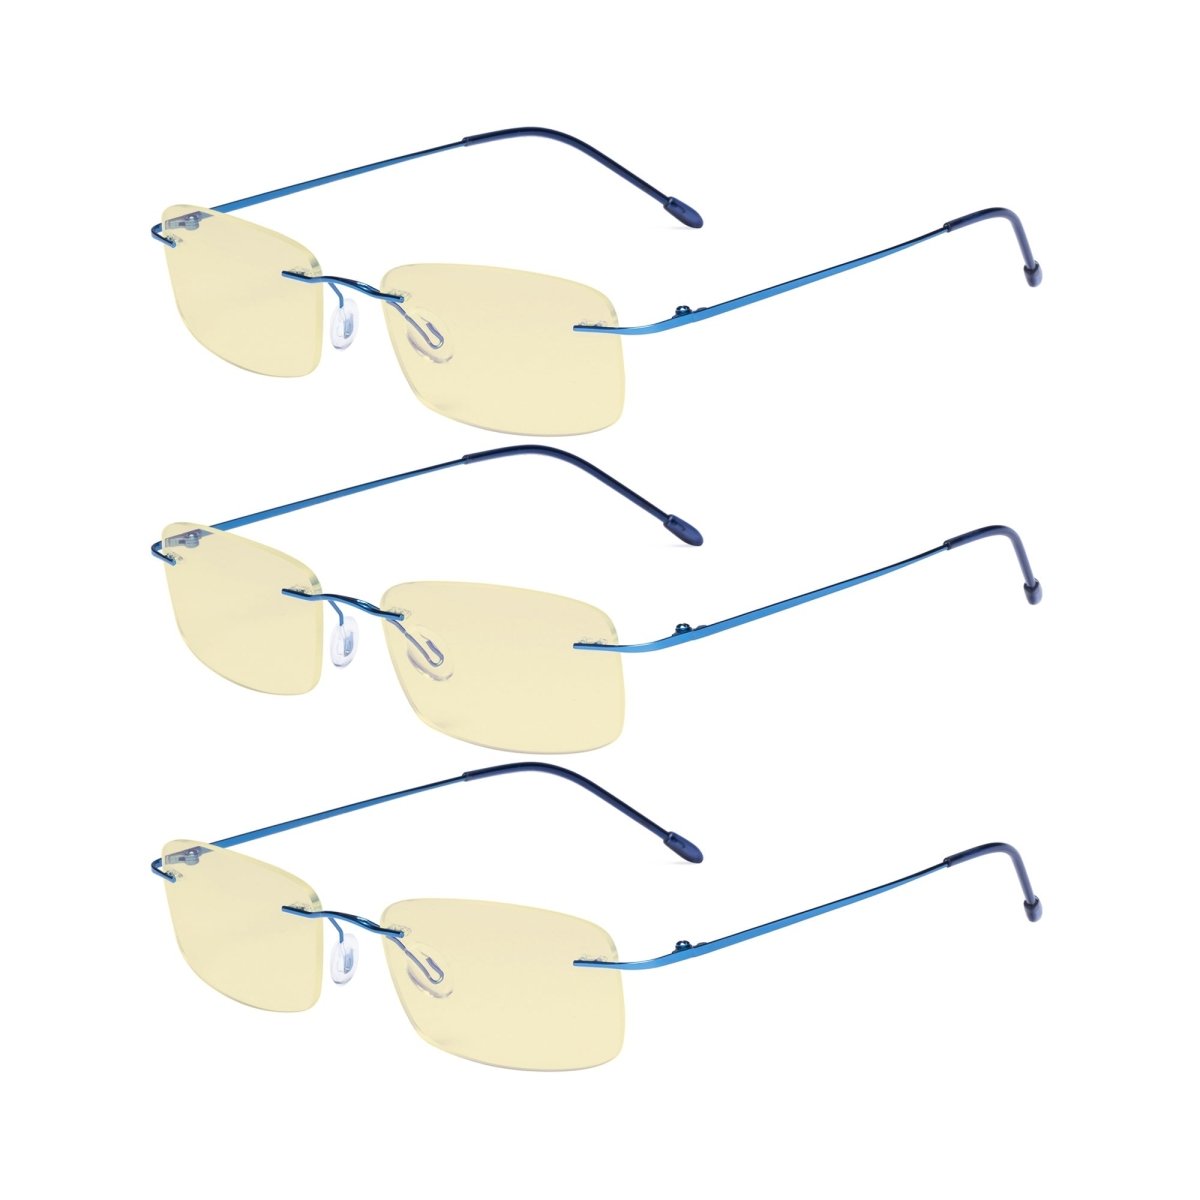 3 Pack Rimless Blue Light Blocking Reading Glasses TMWK8eyekeeper.com